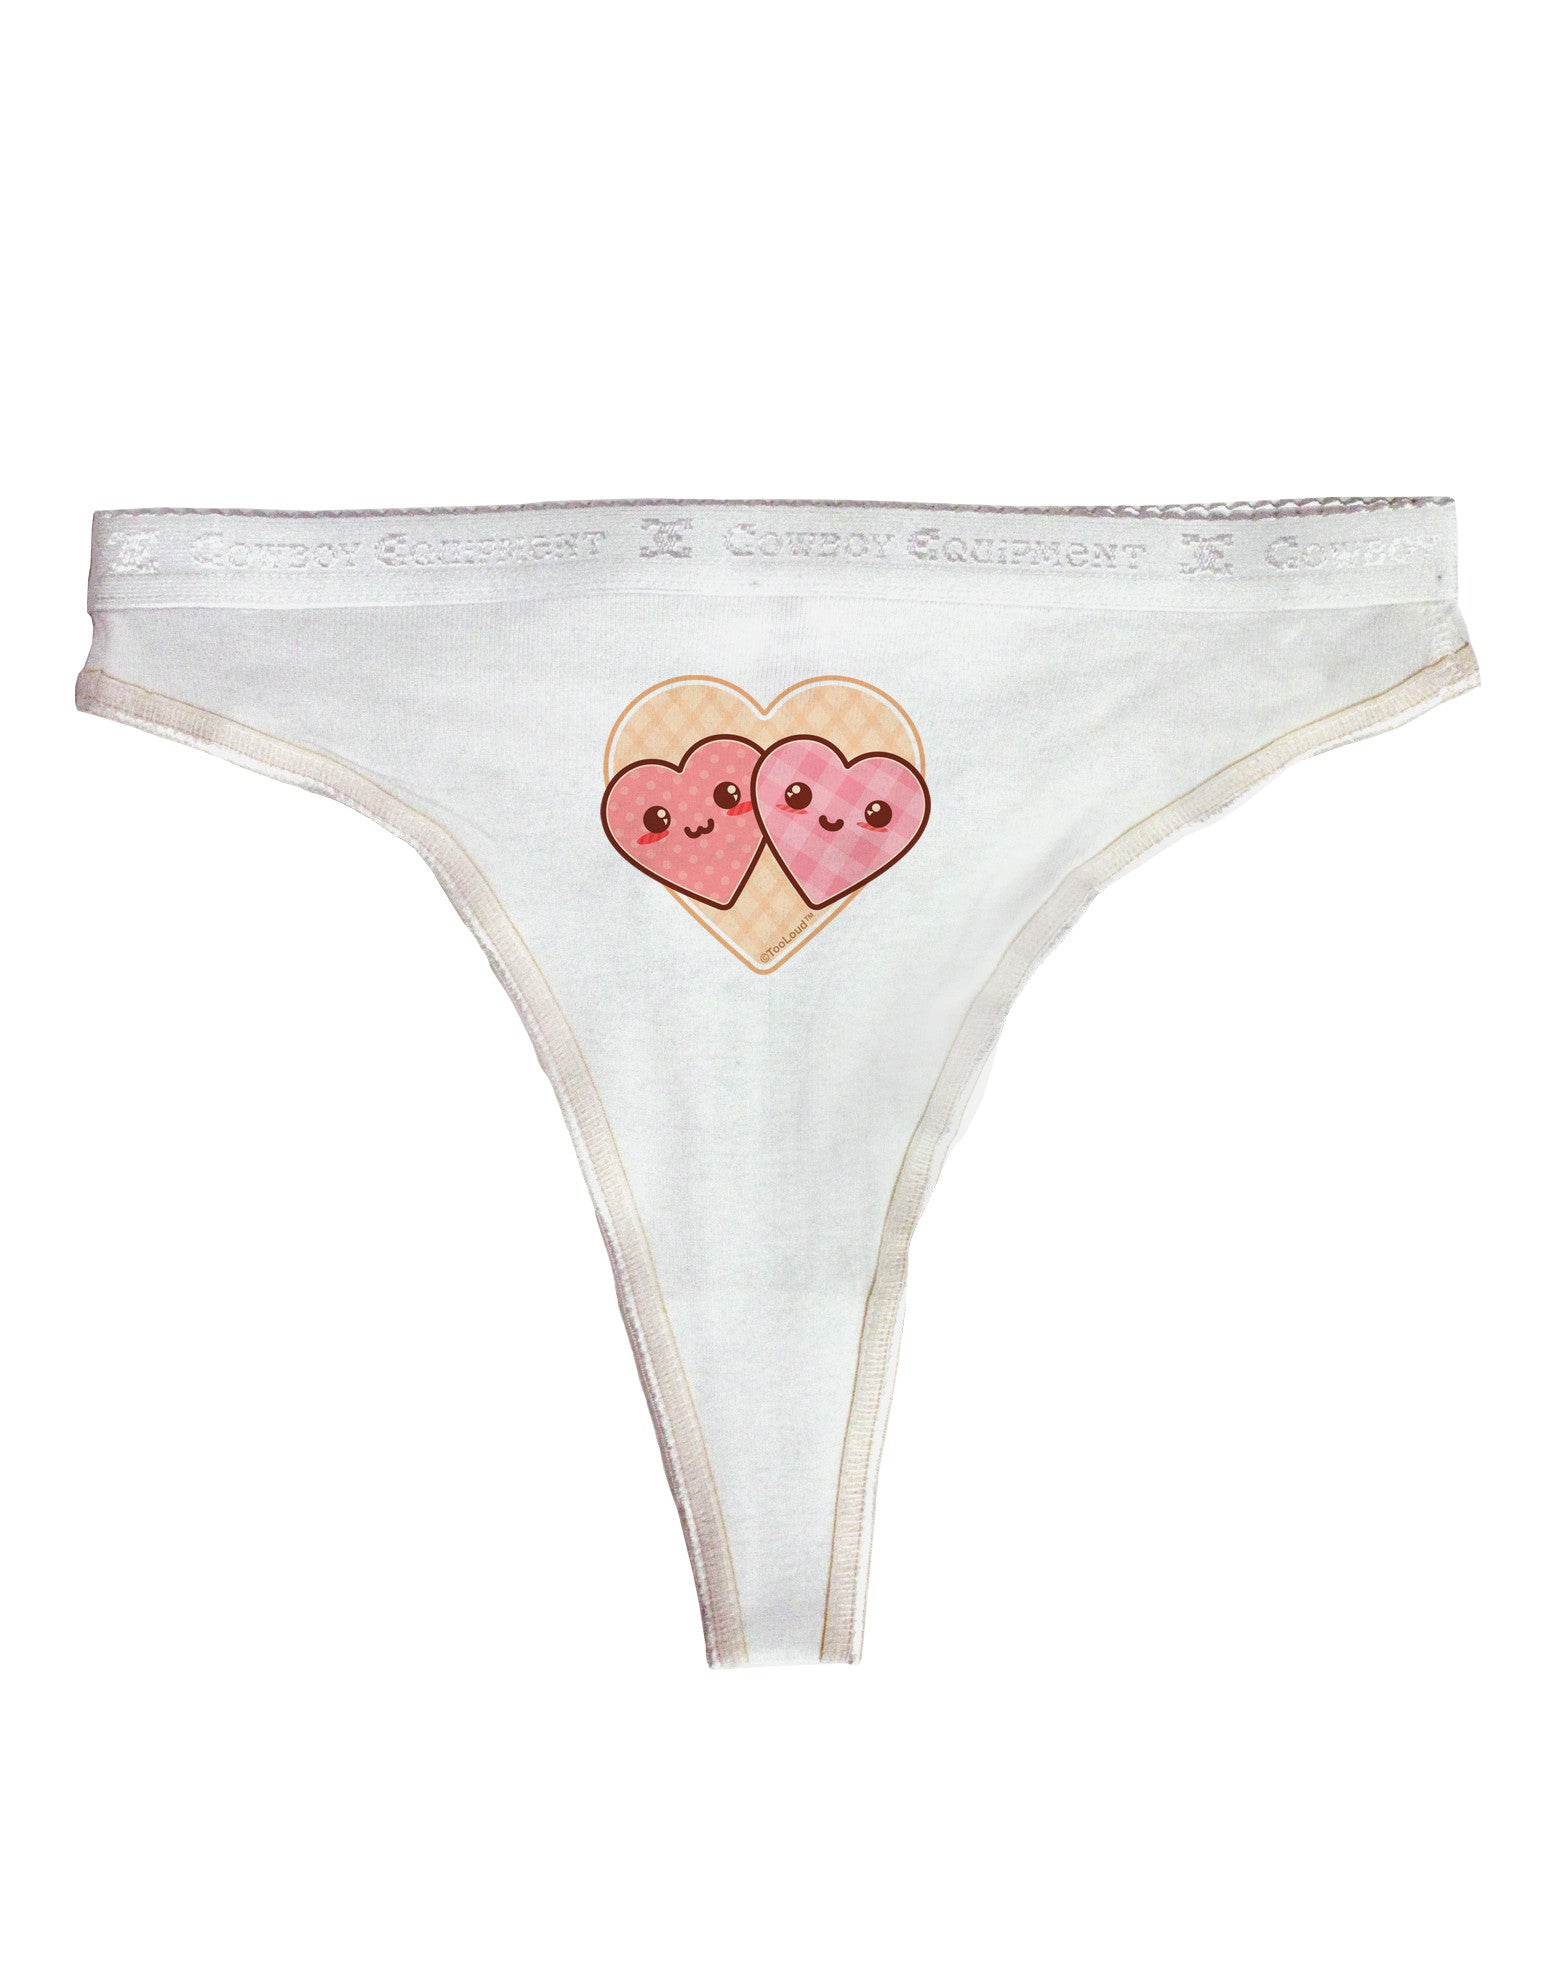 Cute Mesh Tanga Panties, Best Underwear For Women